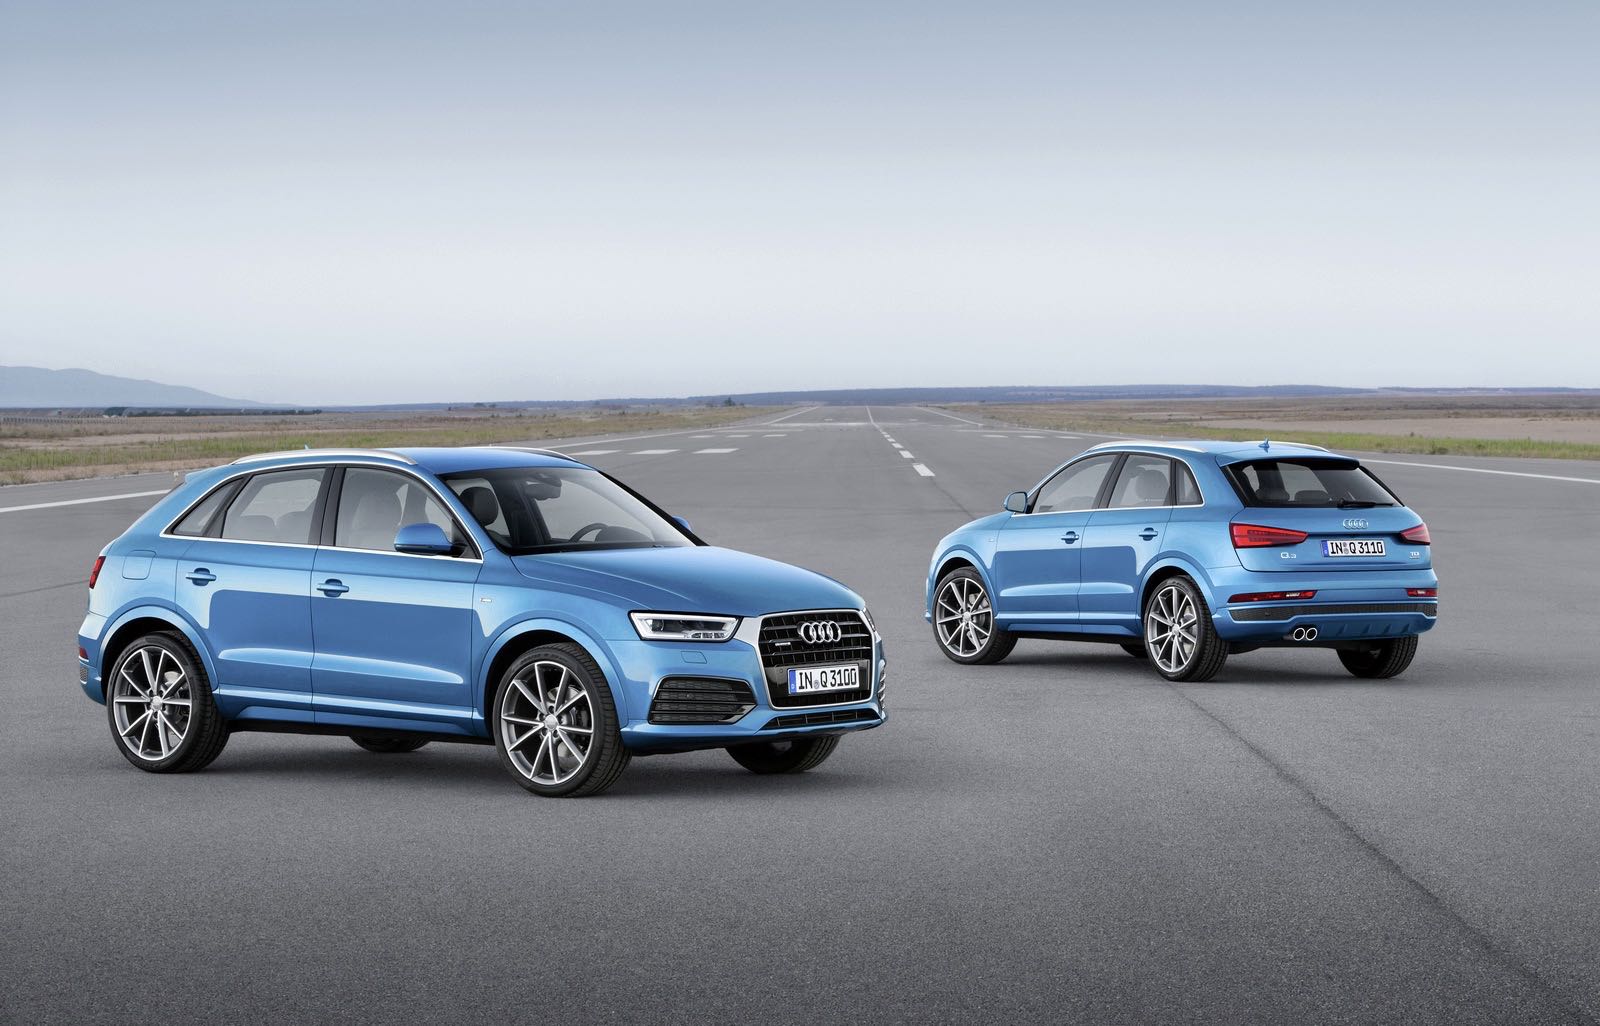 Facelift: Bedre økonomi i ny Audi Q3